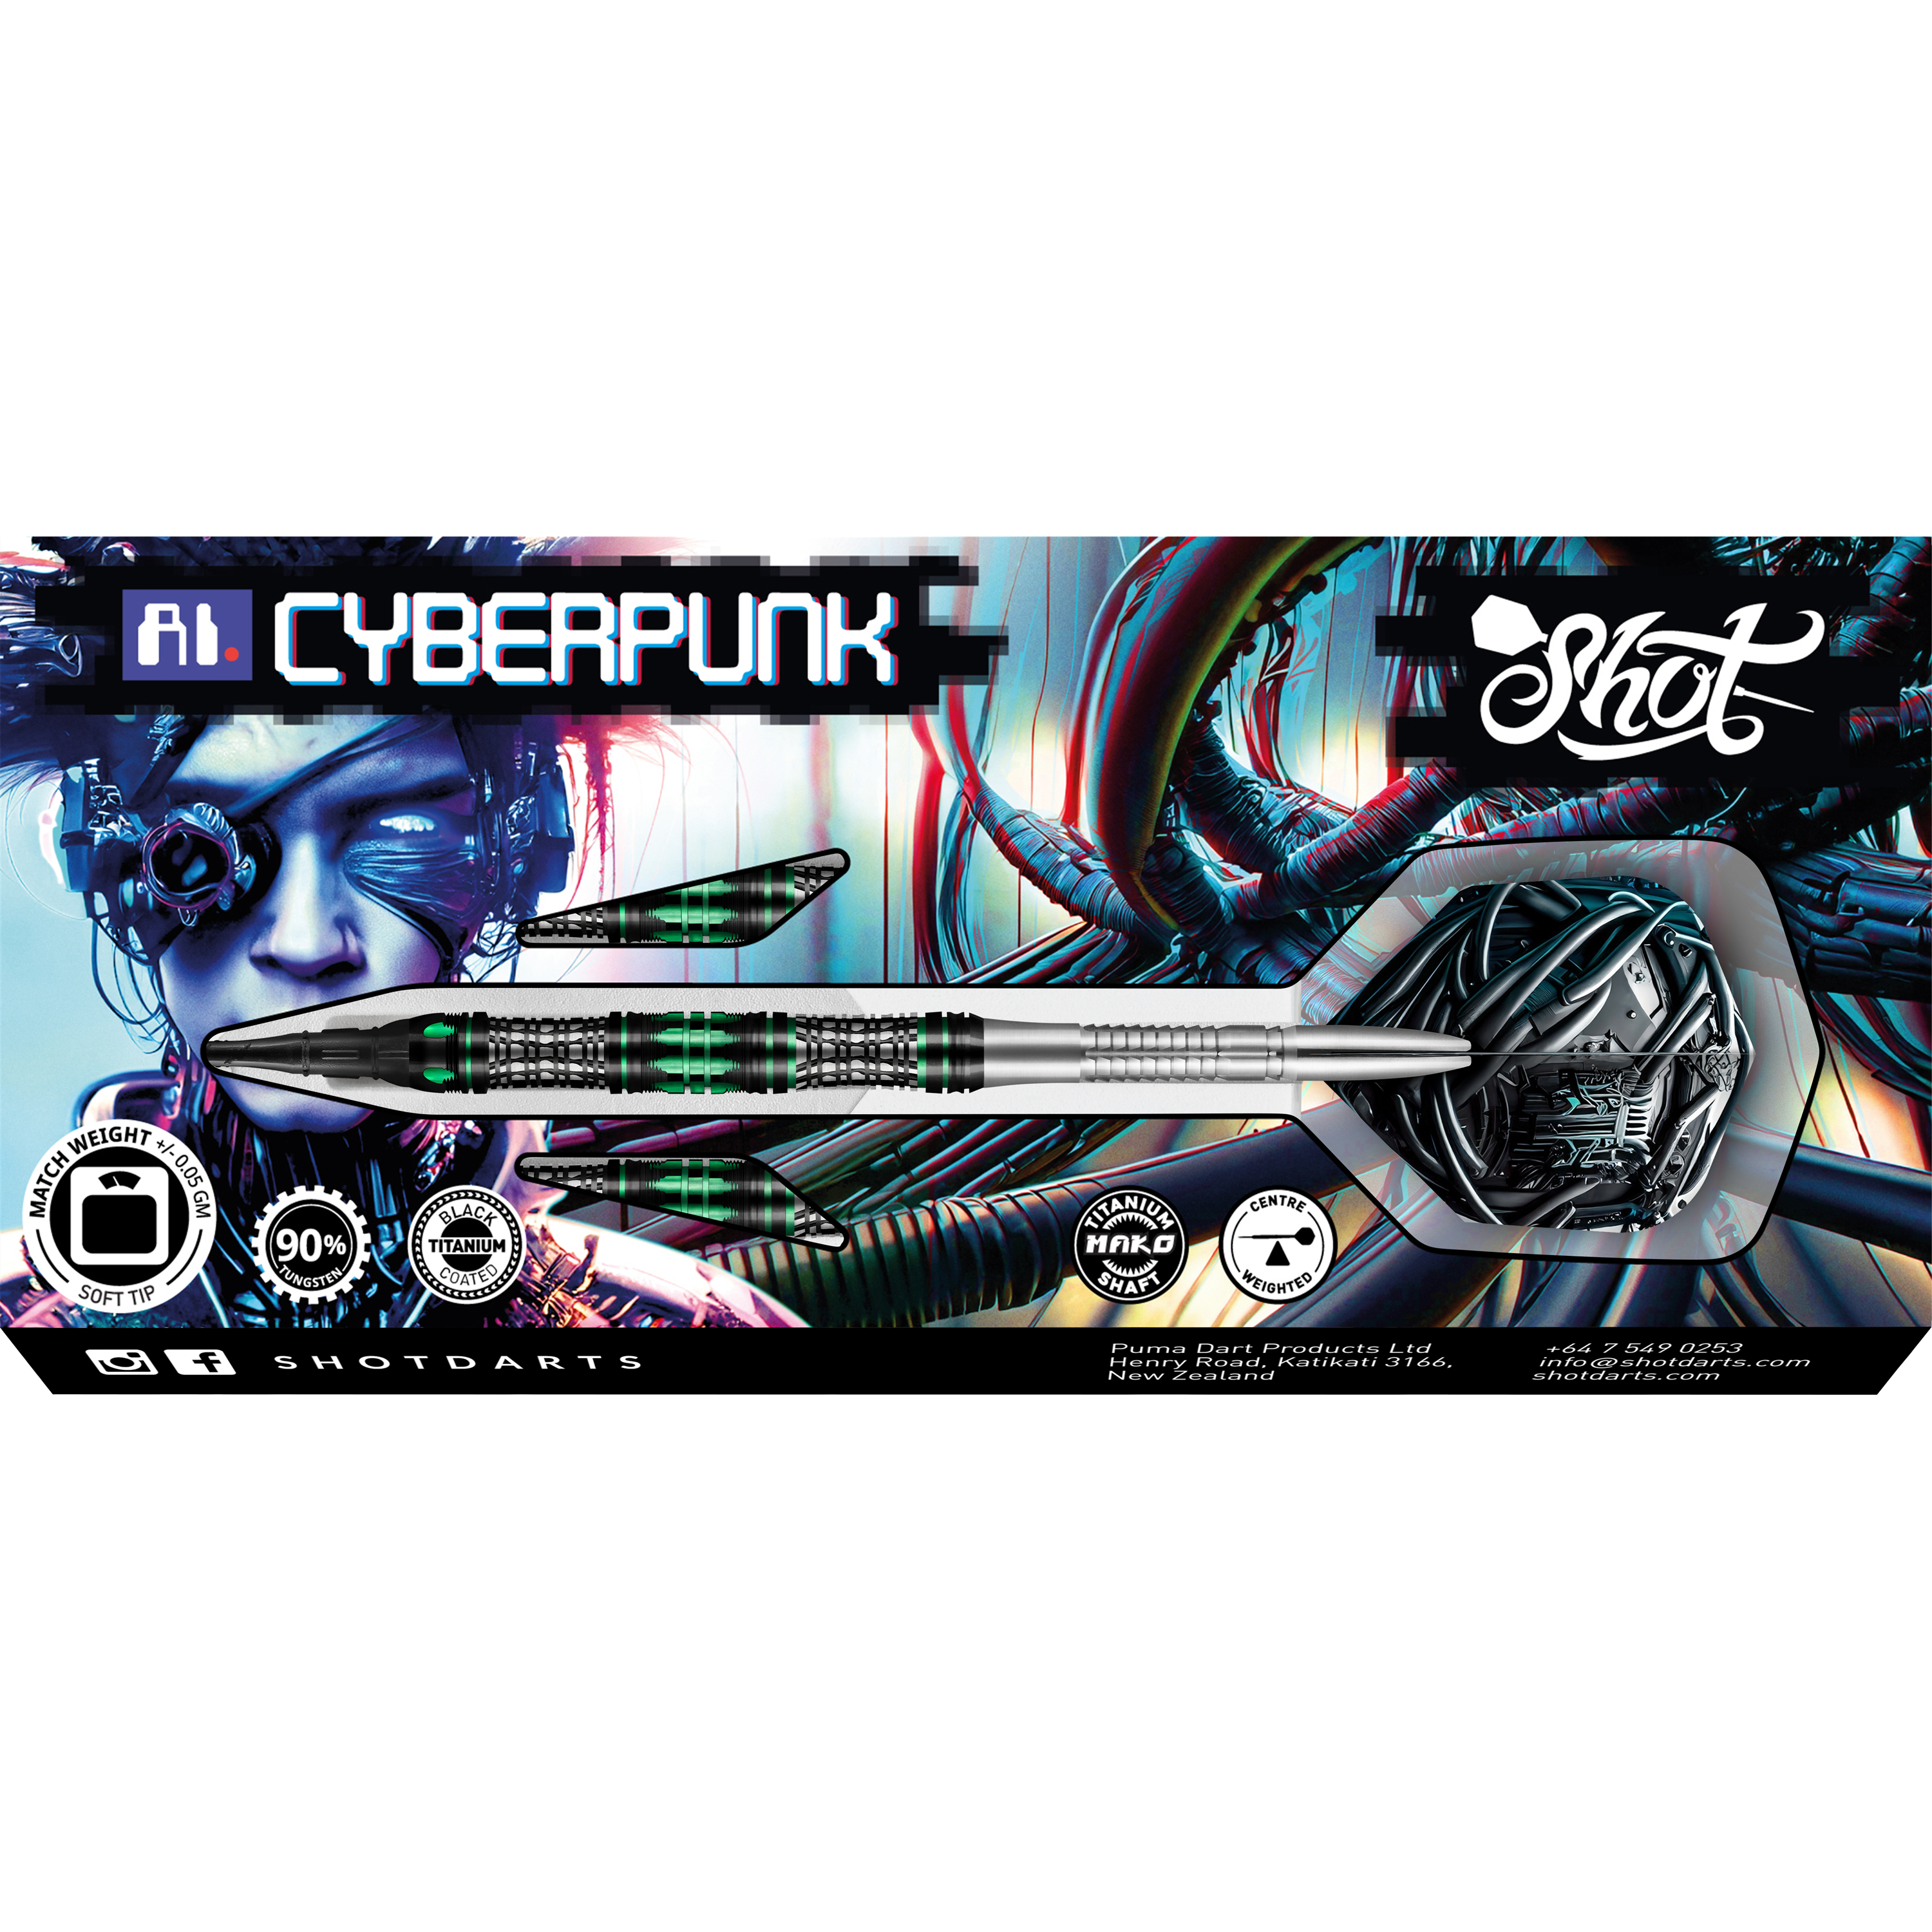 Shot - Ai Cyberpunk - Softdart 